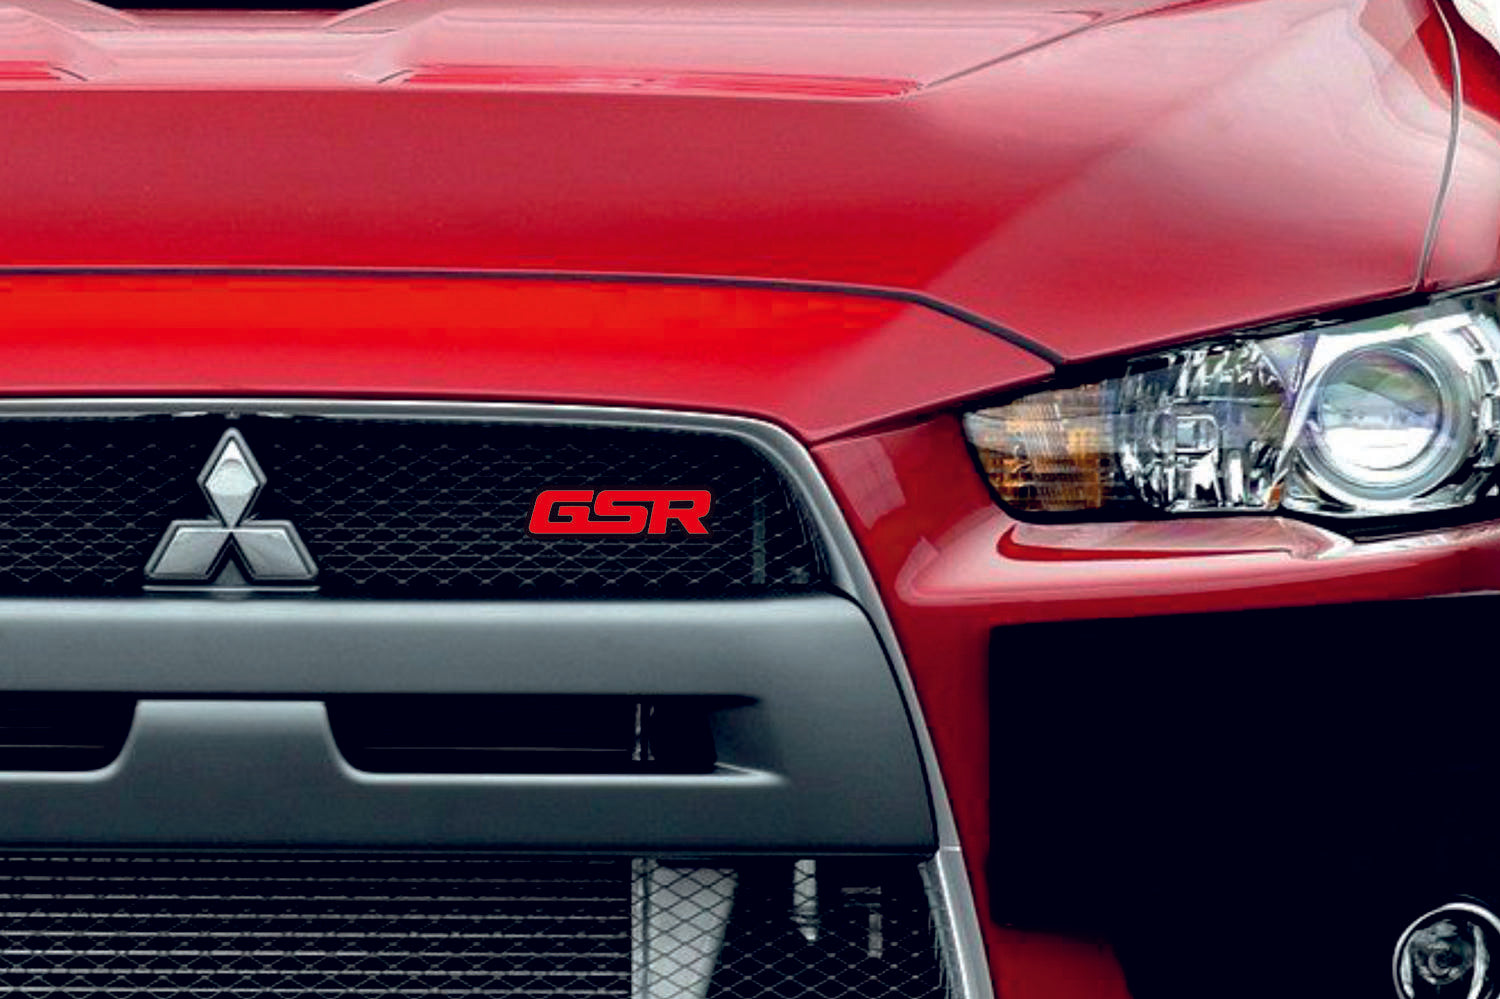 Mitsubishi Radiator grille emblem with GSR logo - decoinfabric